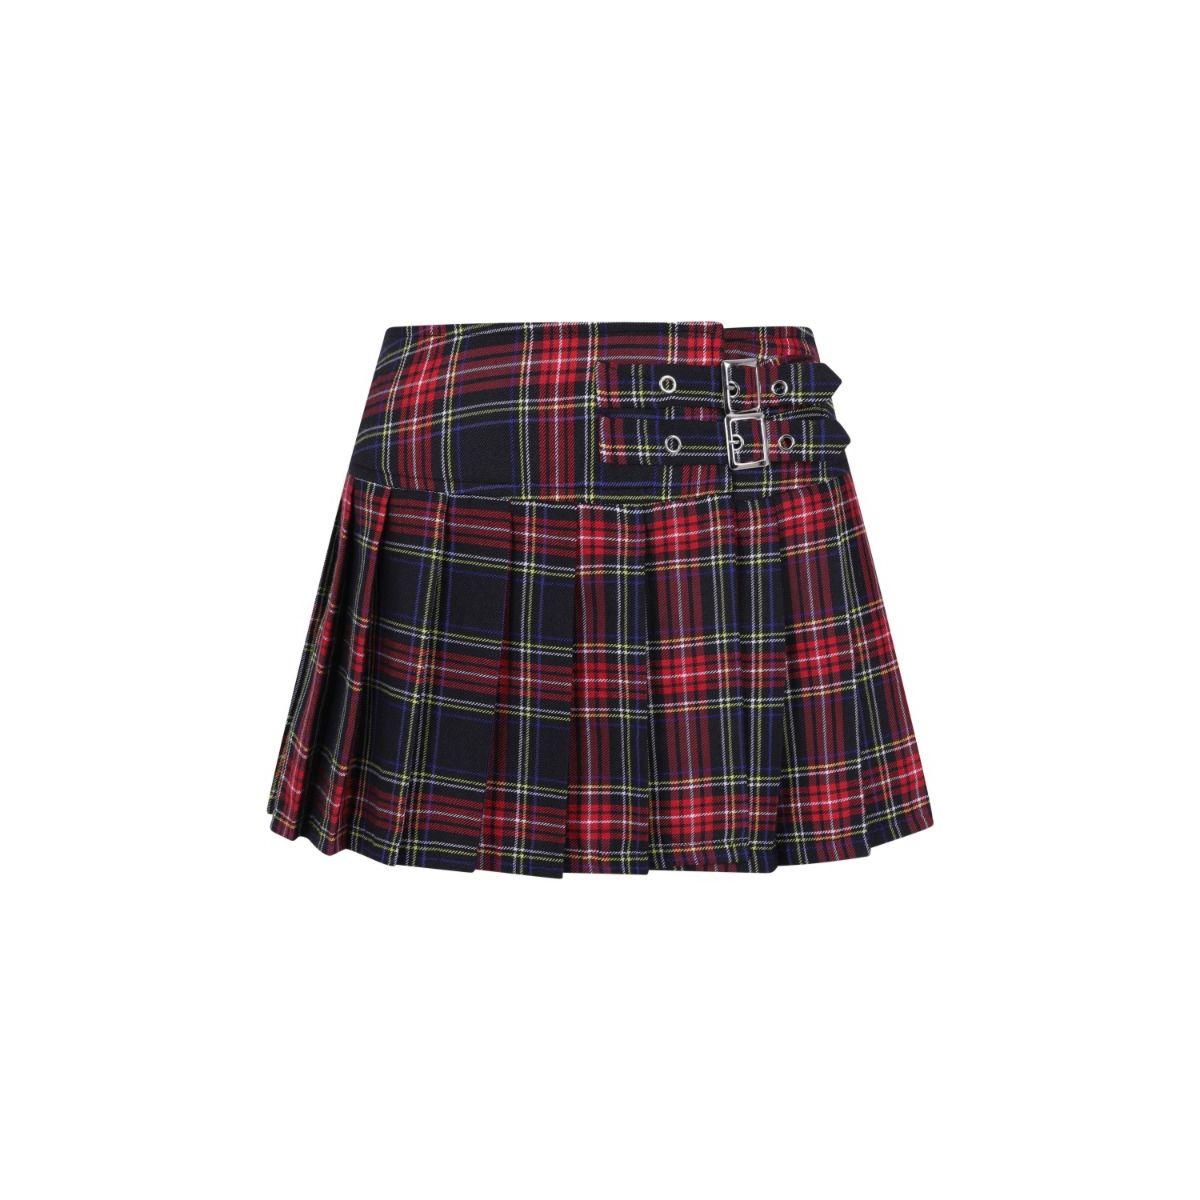 Banned Apparel - Black Tartan Mini Skirt - Cybershop Australia